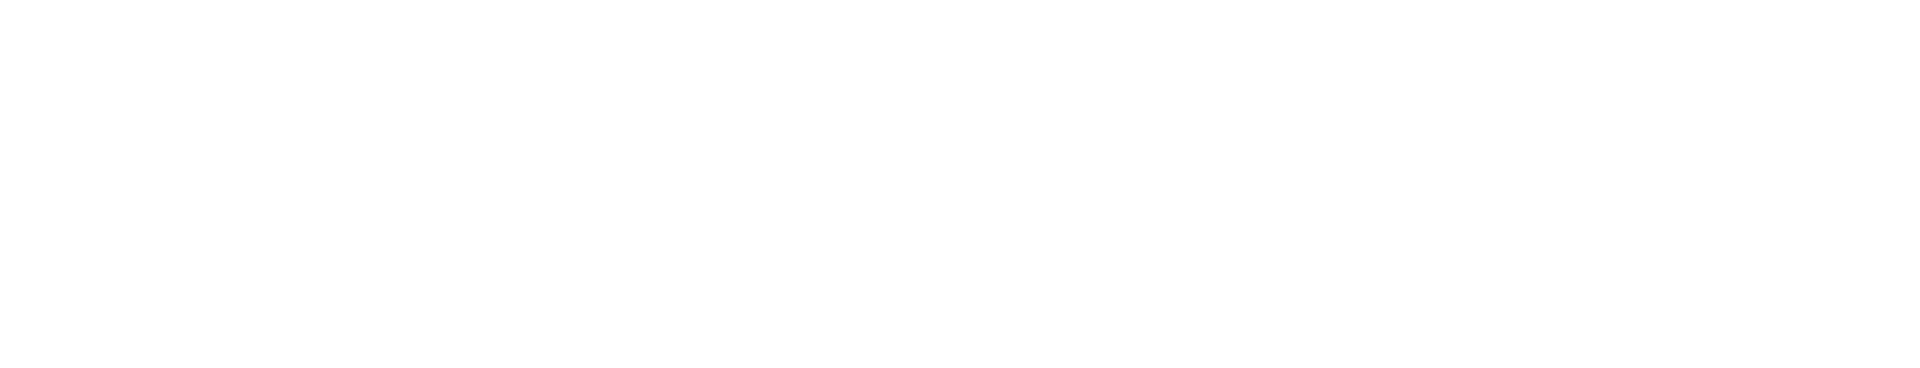 9.16sat17sun10:00-18:00会場：出島メッセ長崎